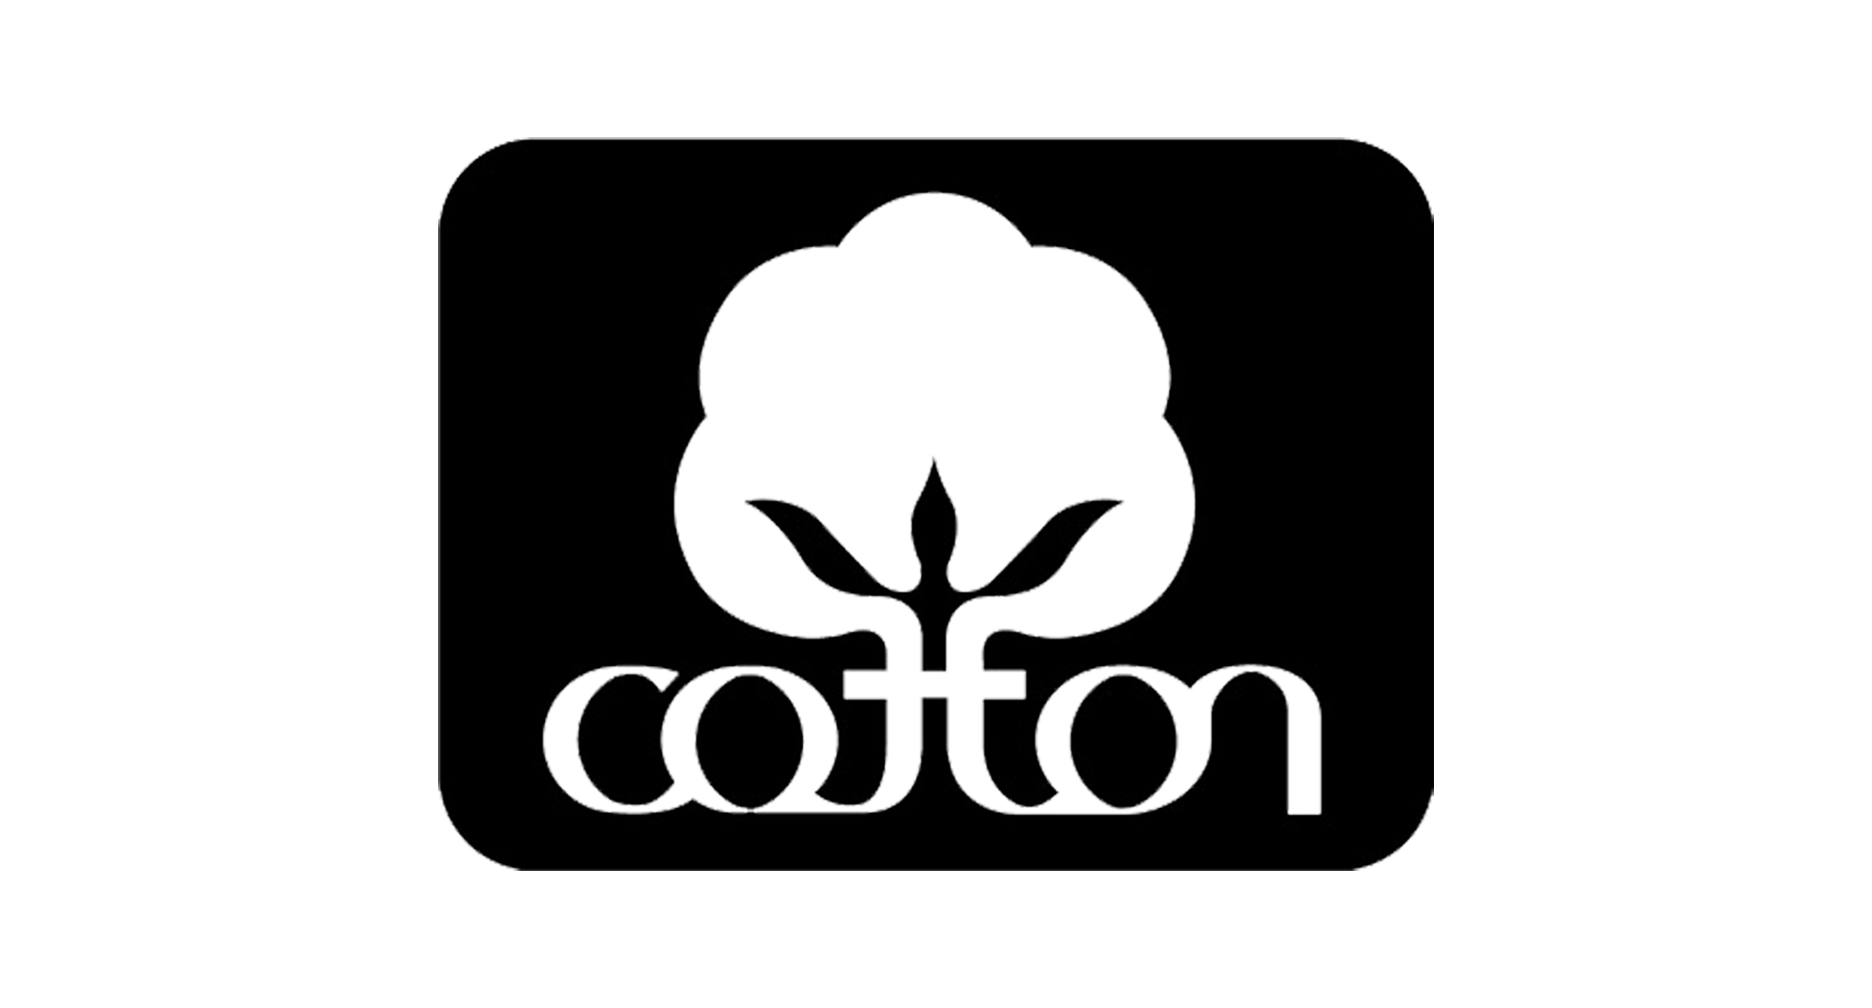 Cotton Logo